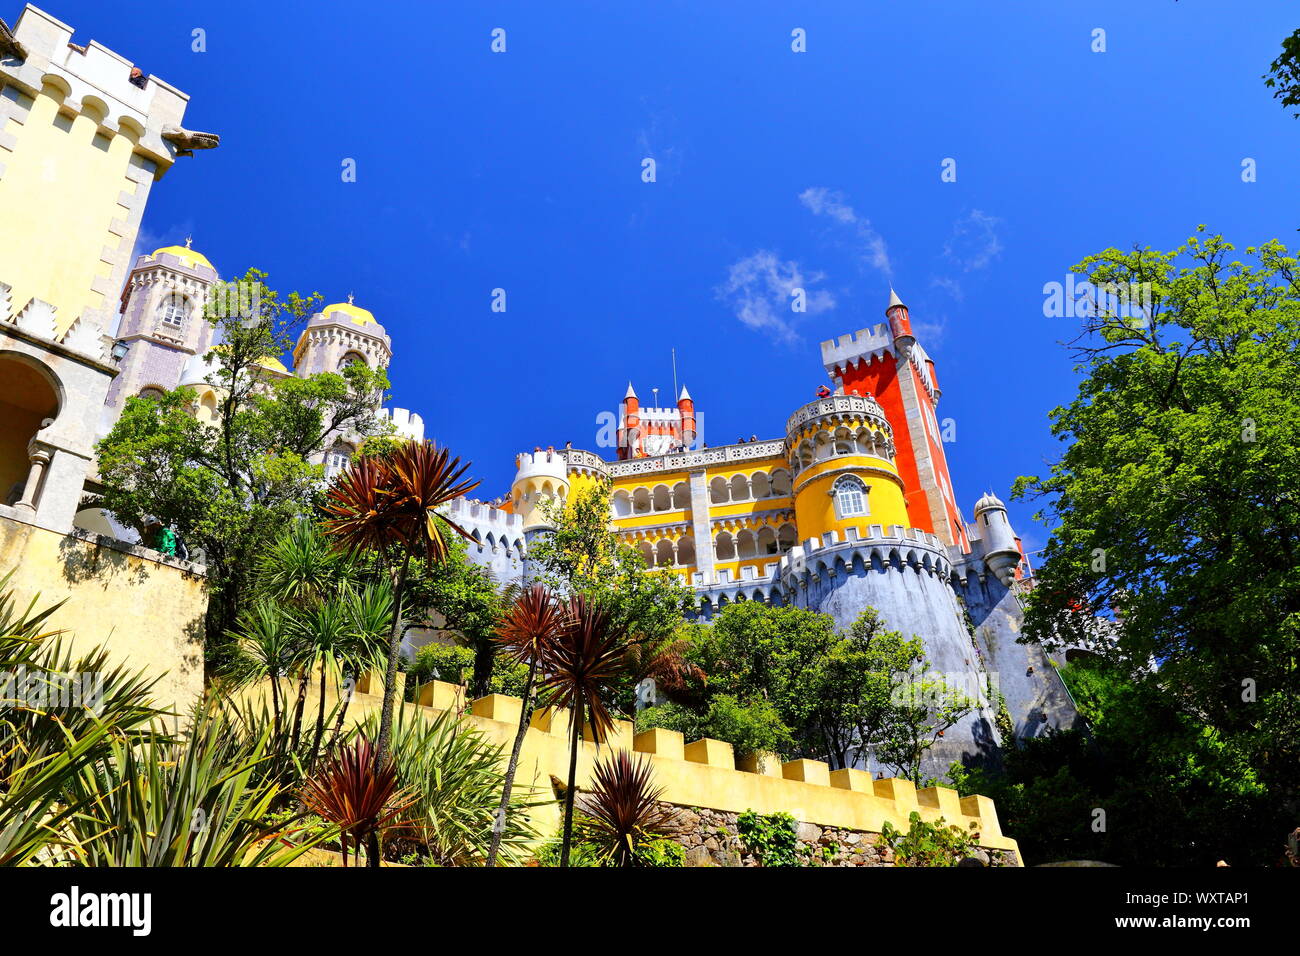 The Pena palace in Sintra, Portugal (Parque e Palacio Nacional da Pena), A  UNESCO World Heritage Site Stock Photo - Alamy